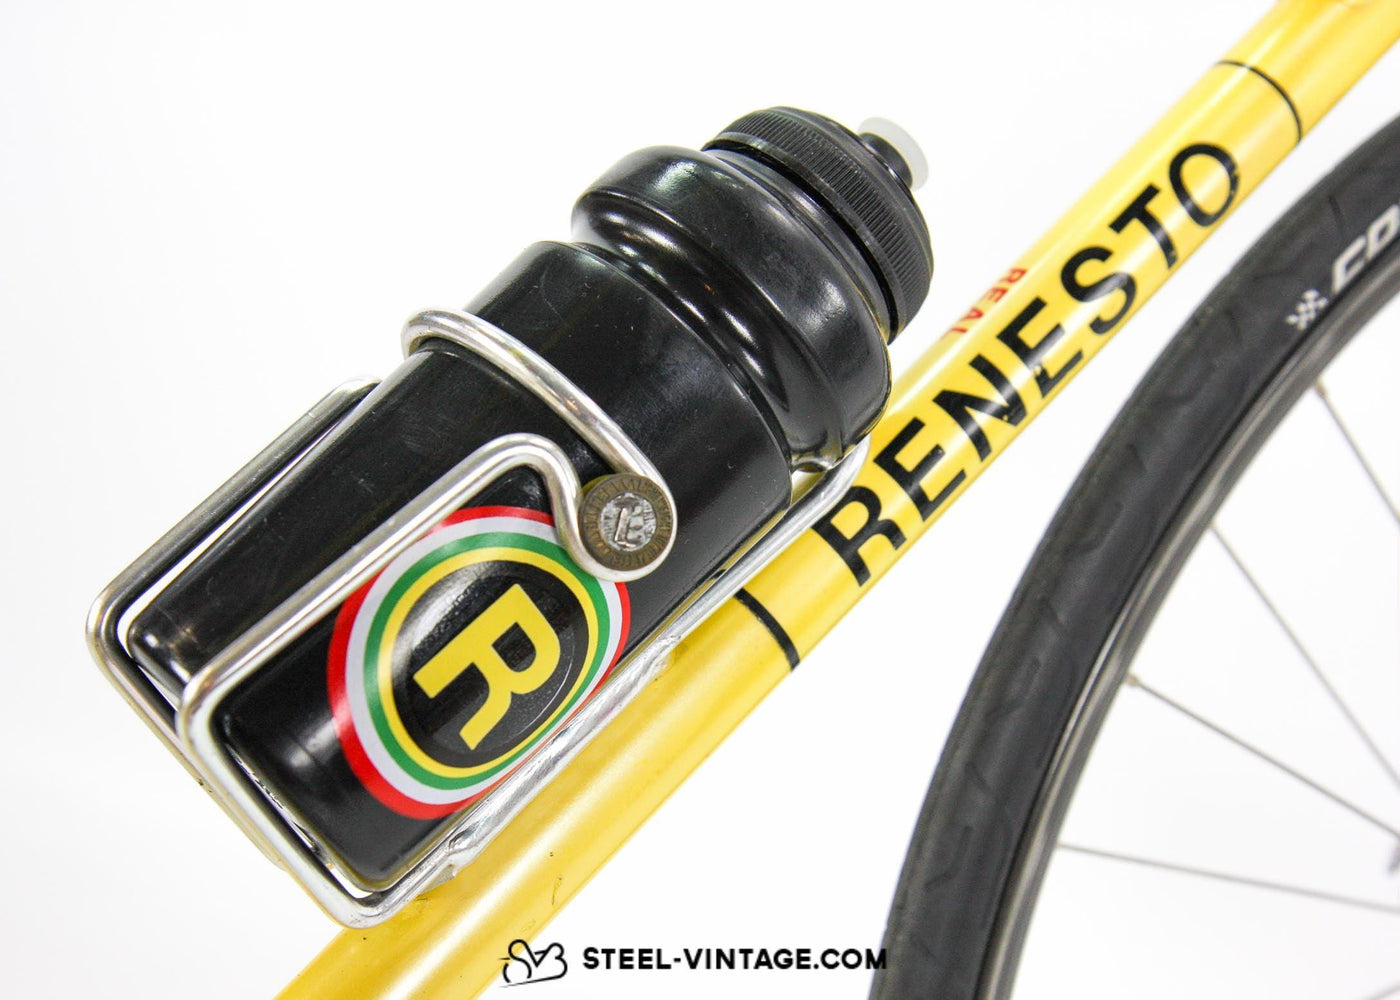 Renesto Crono Time Trial Bike 1985 - Steel Vintage Bikes